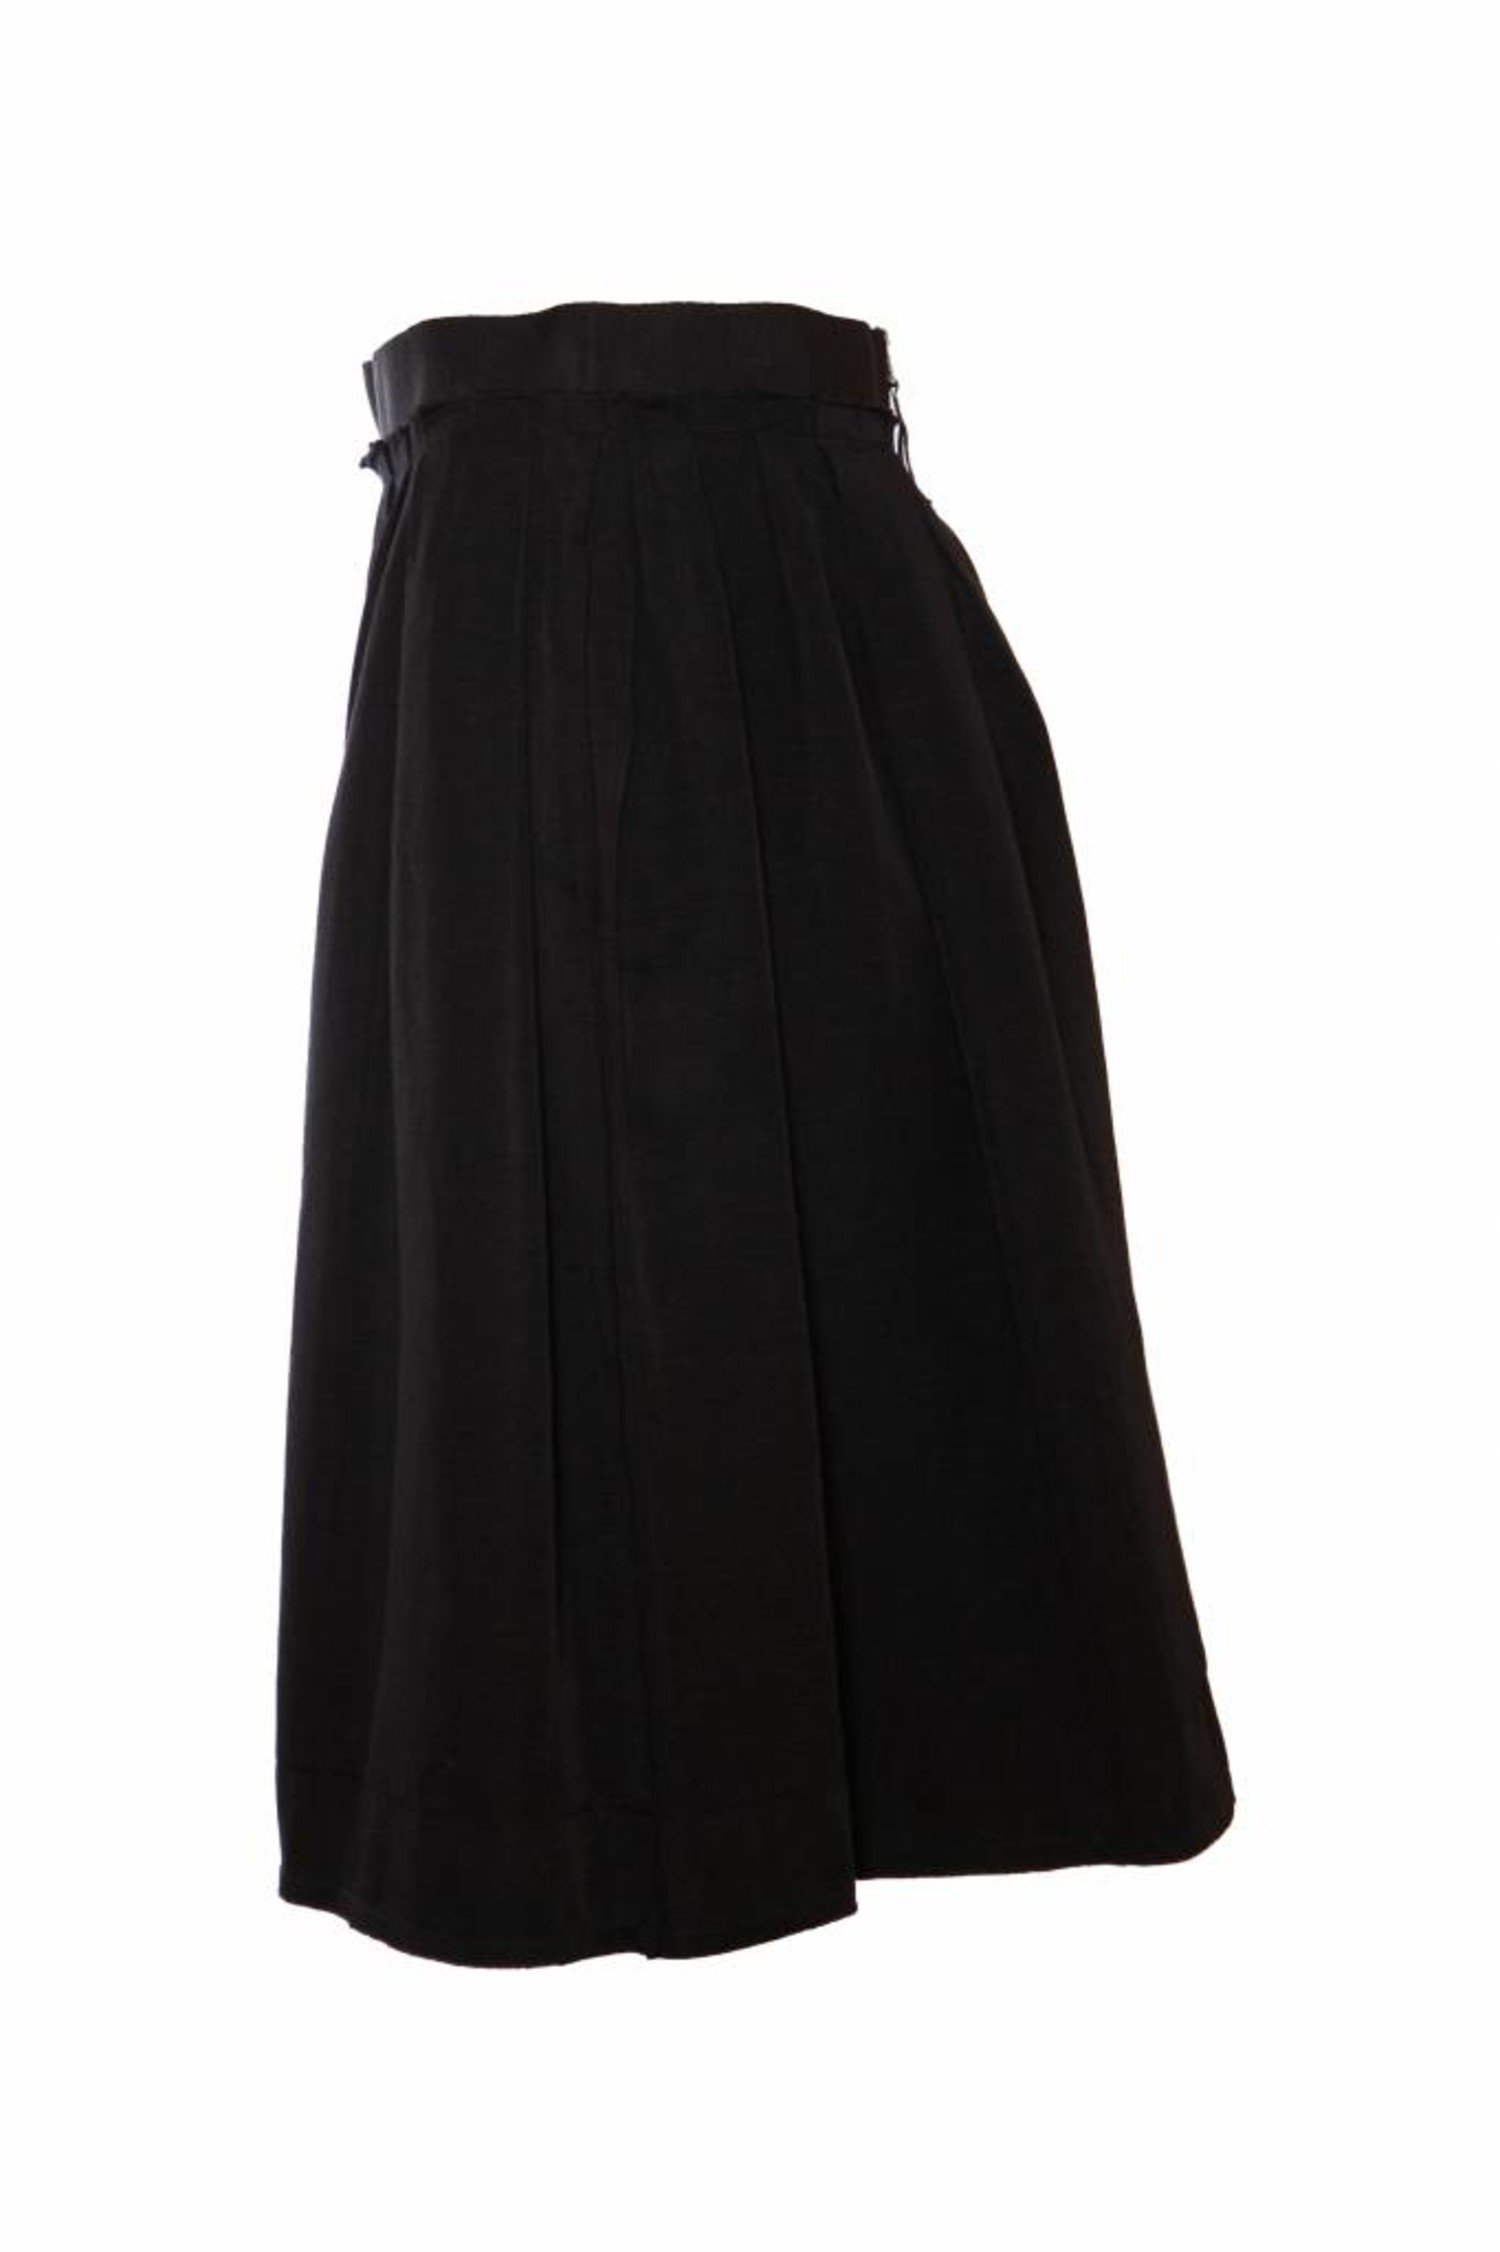 Dolce & Gabbana, black pleated skirt in size IT46/M. - Unique Designer ...